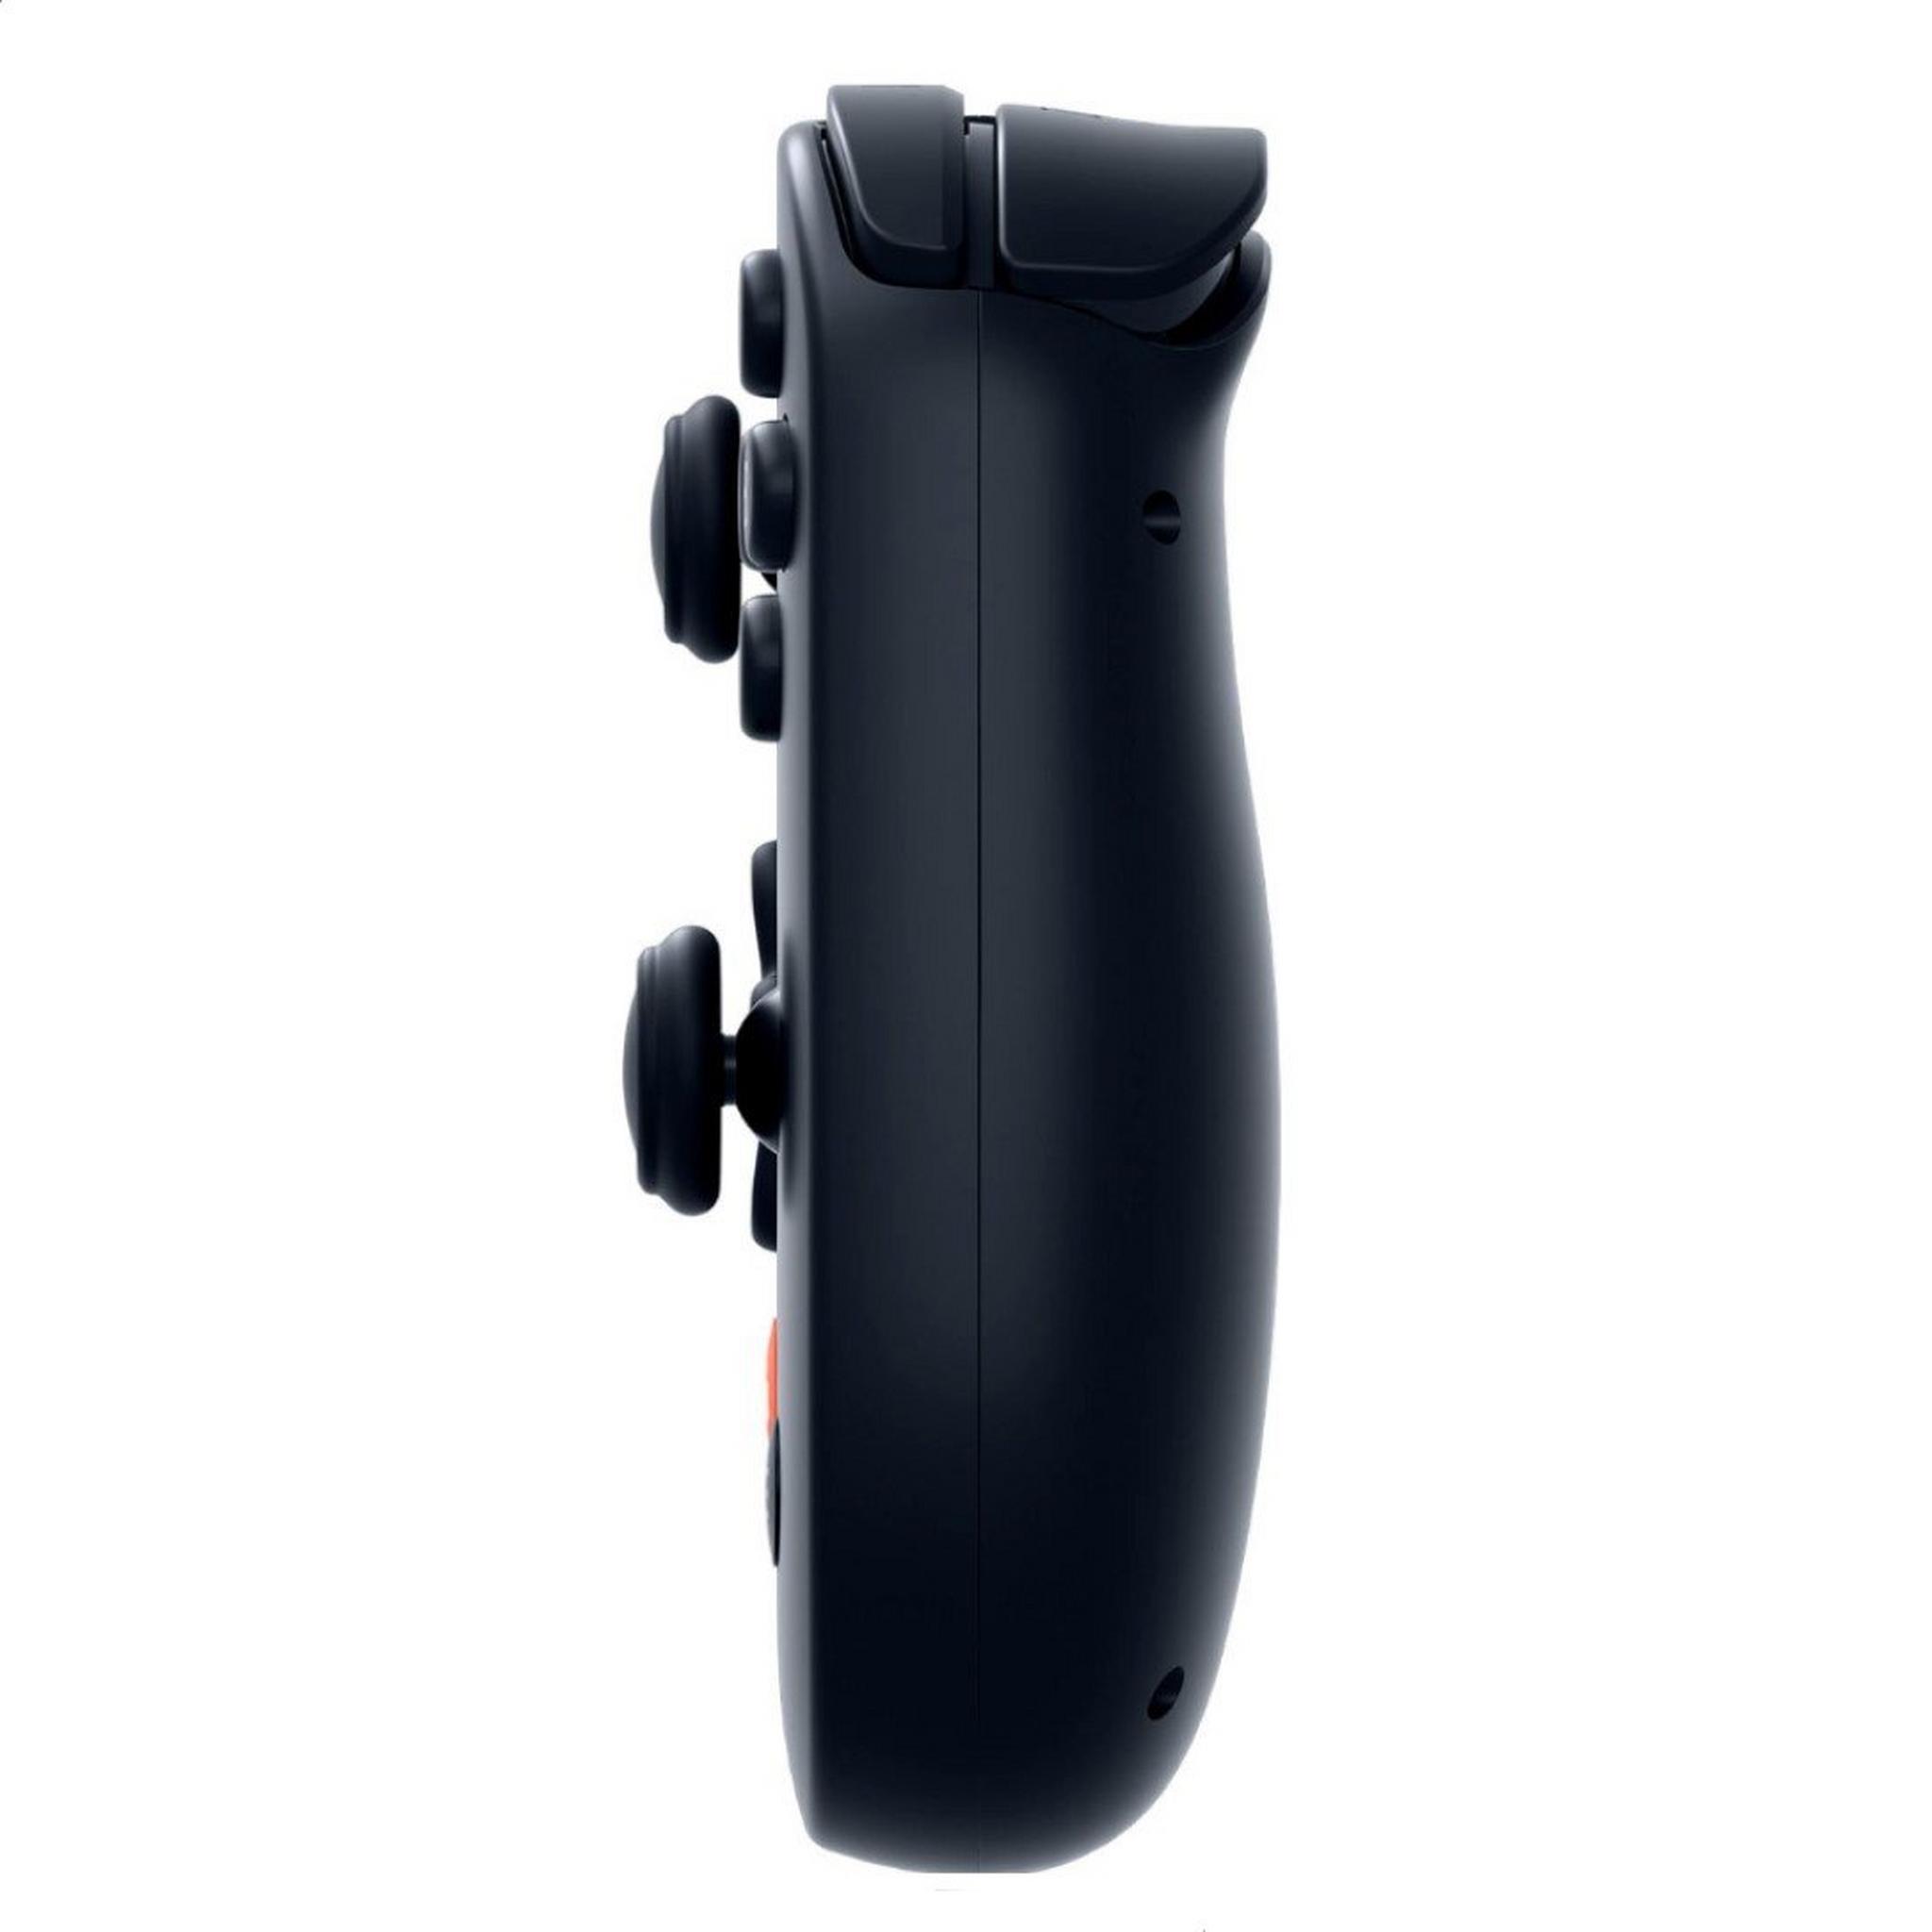 BACKBONE One Handheld iPhone Game Controller for Xbox, BB-02-B-X – Black